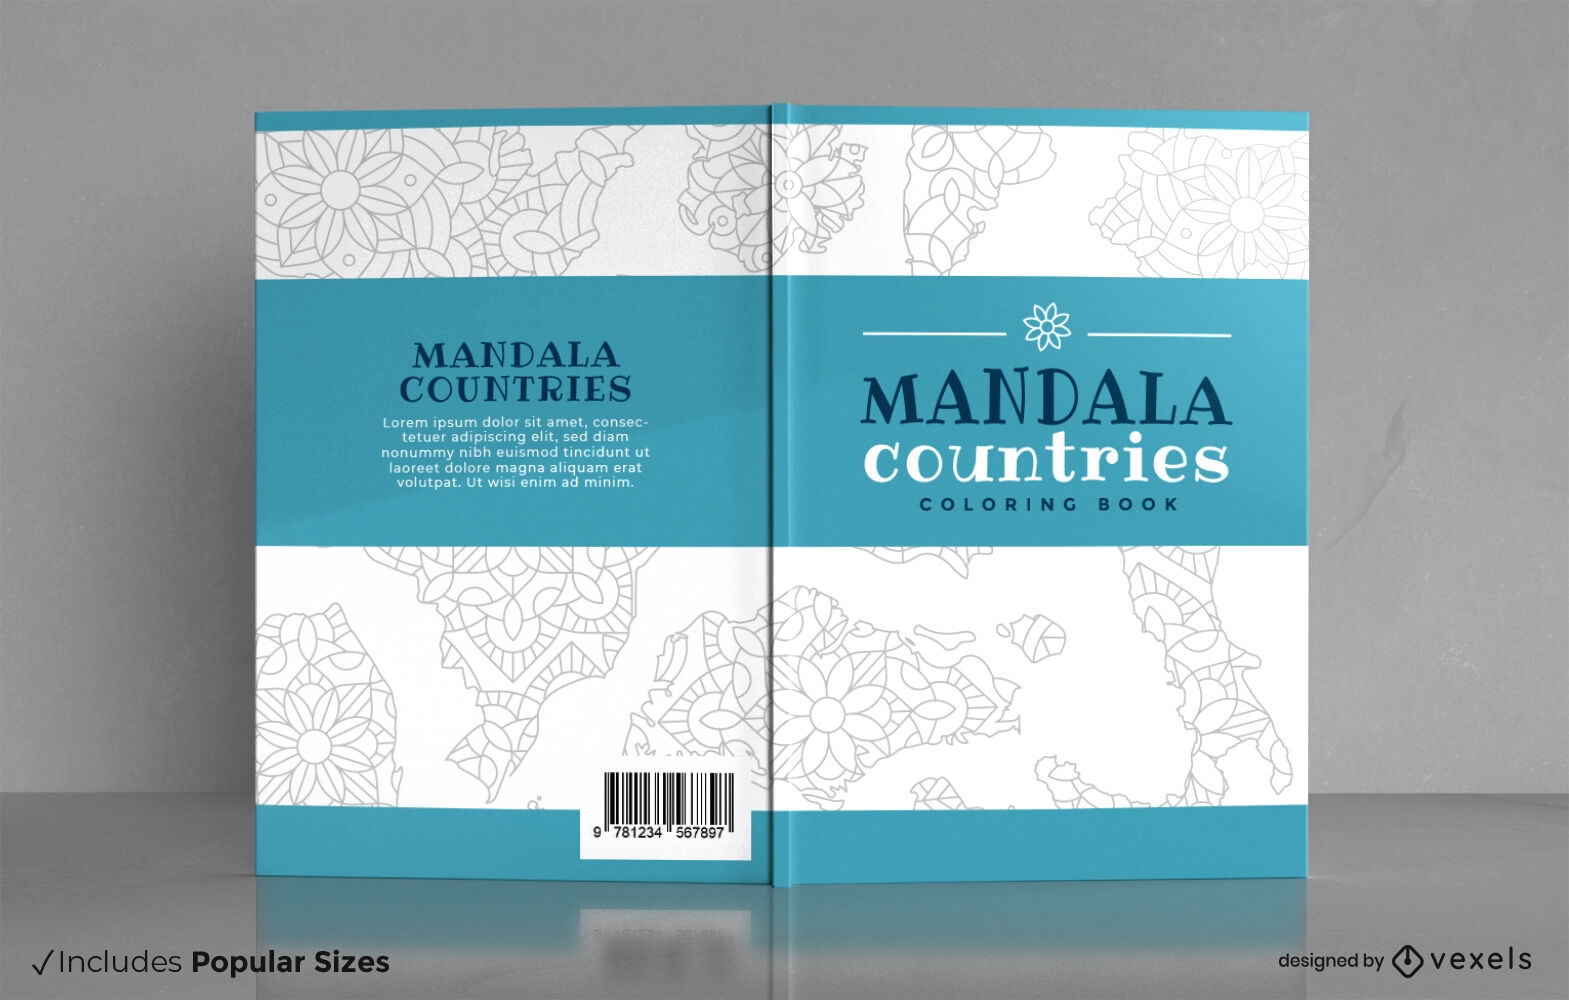 Mandala-L?nder Malbuch-Cover-Design